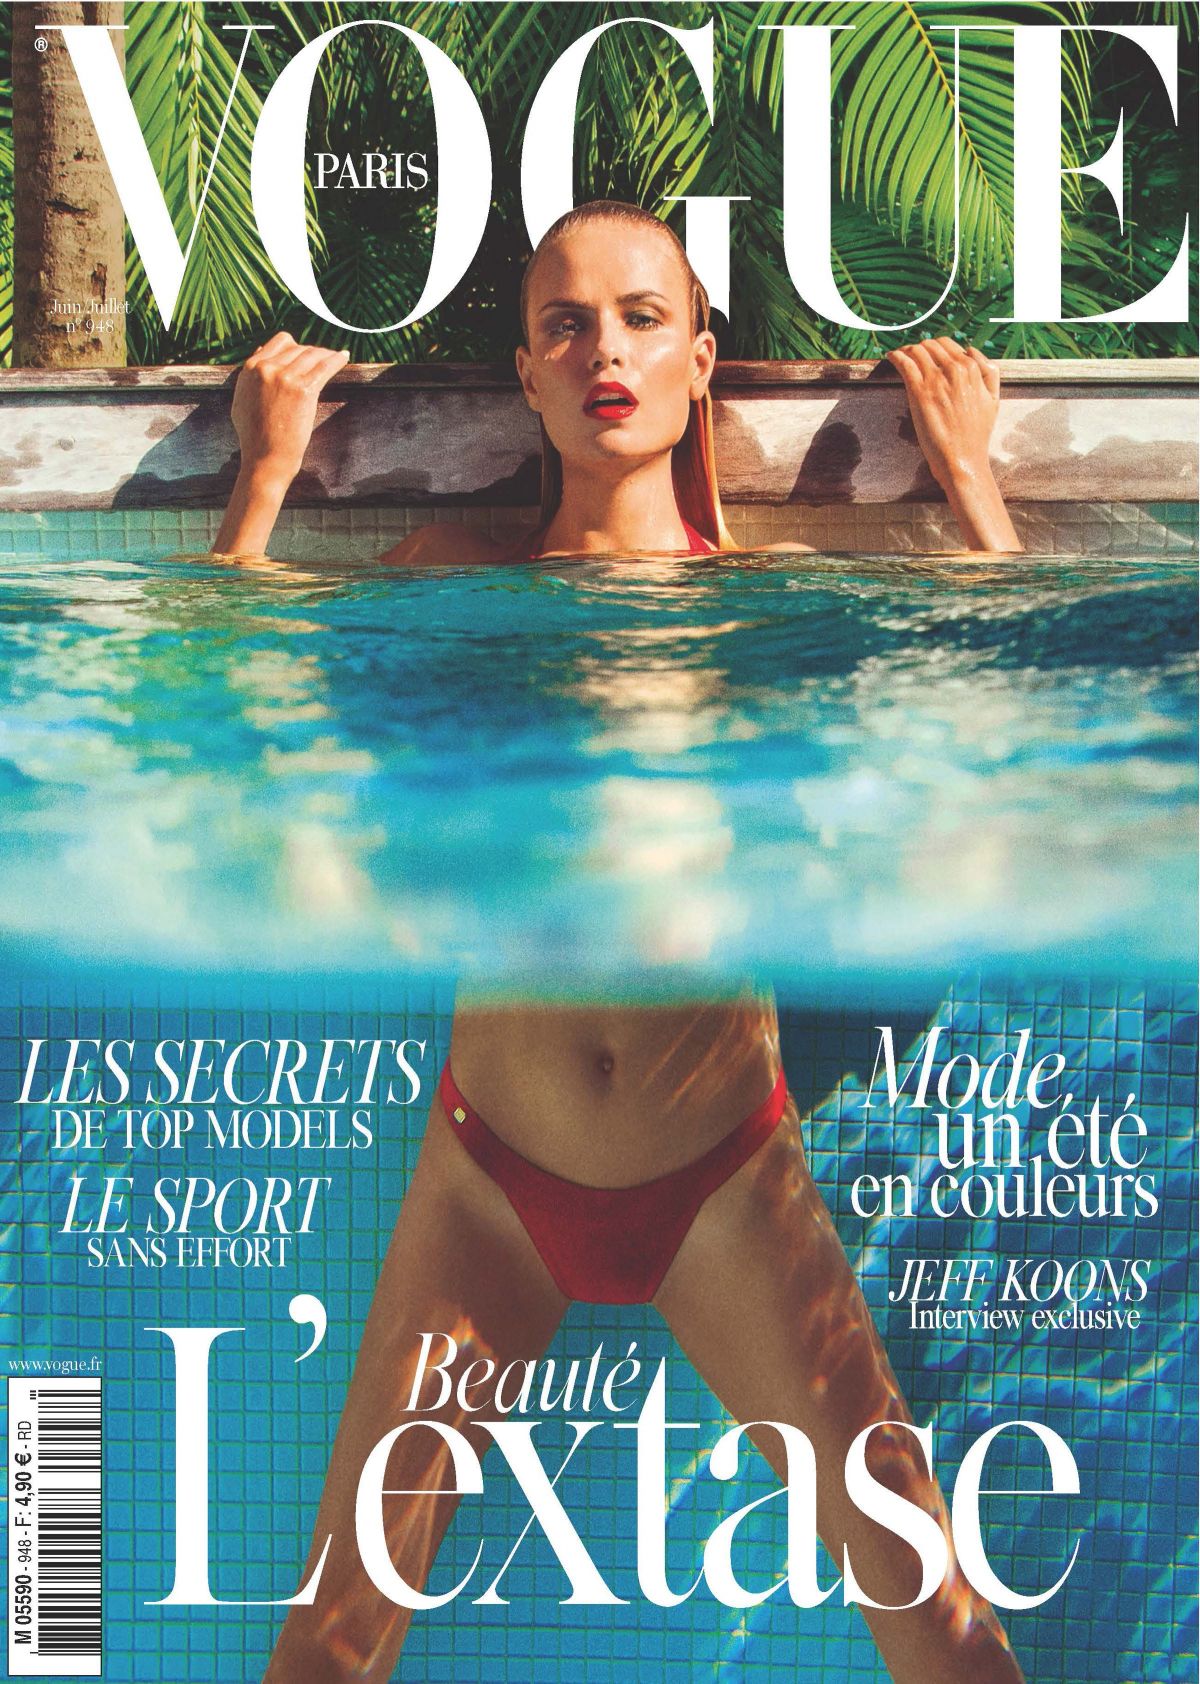 NATASHA POLY in Vogue Magazine, June/July 2014 Issue HawtCelebs